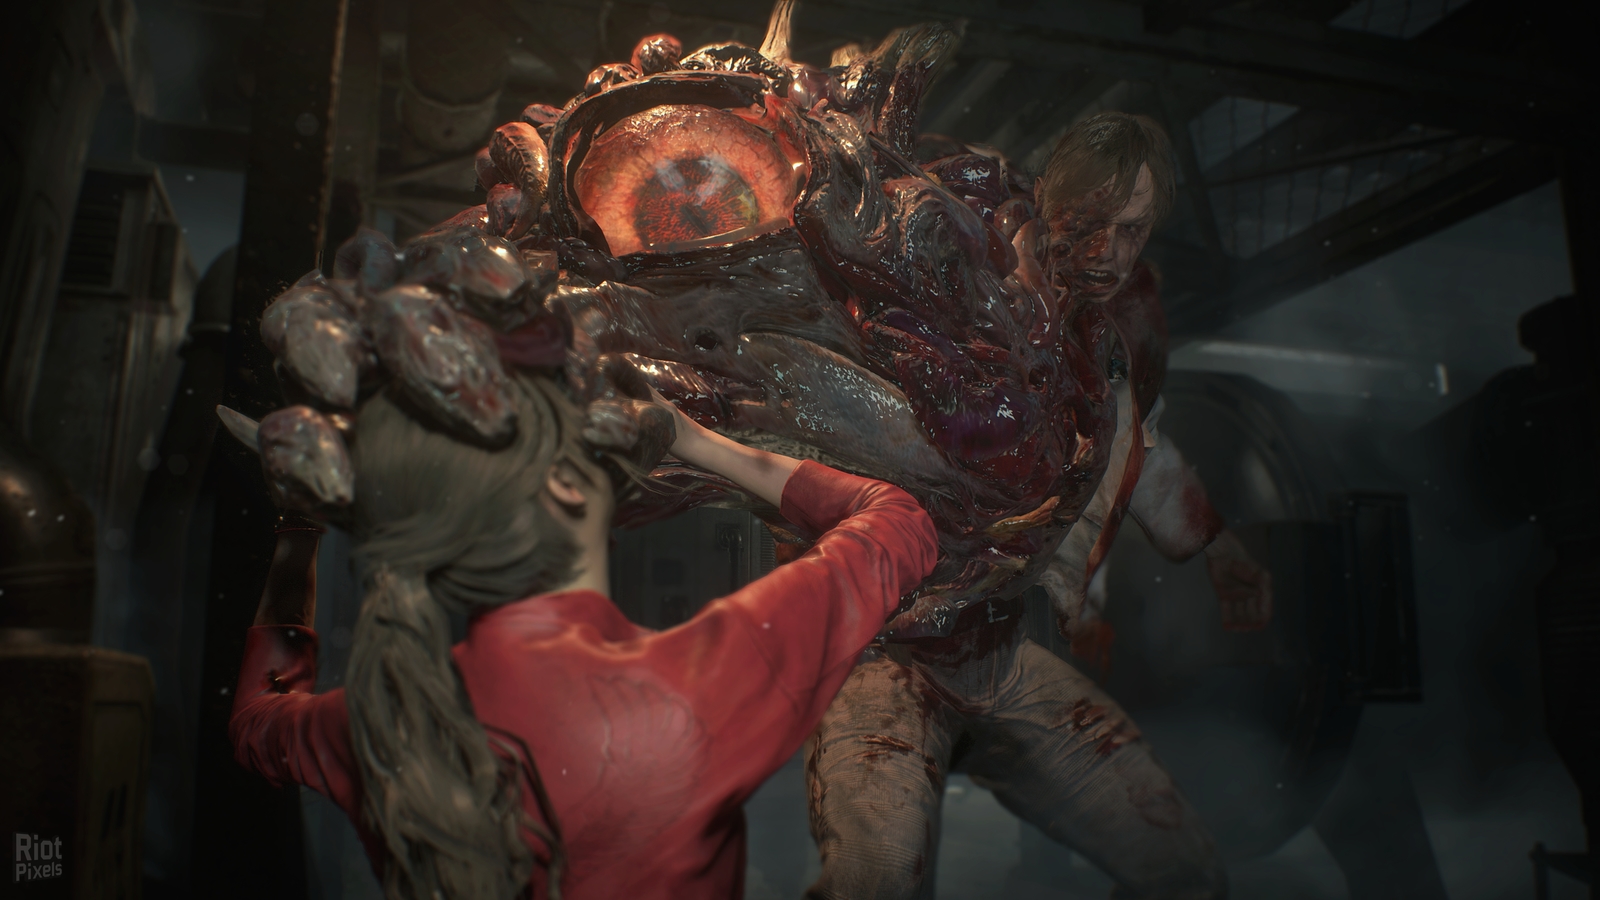 RESIDENT EVIL 2 REMAKE: BEAUTIFUL SCREENSHOTS - Longpost, Screenshot, Games, Horror, Resident Evil 2: Remake, Resident evil